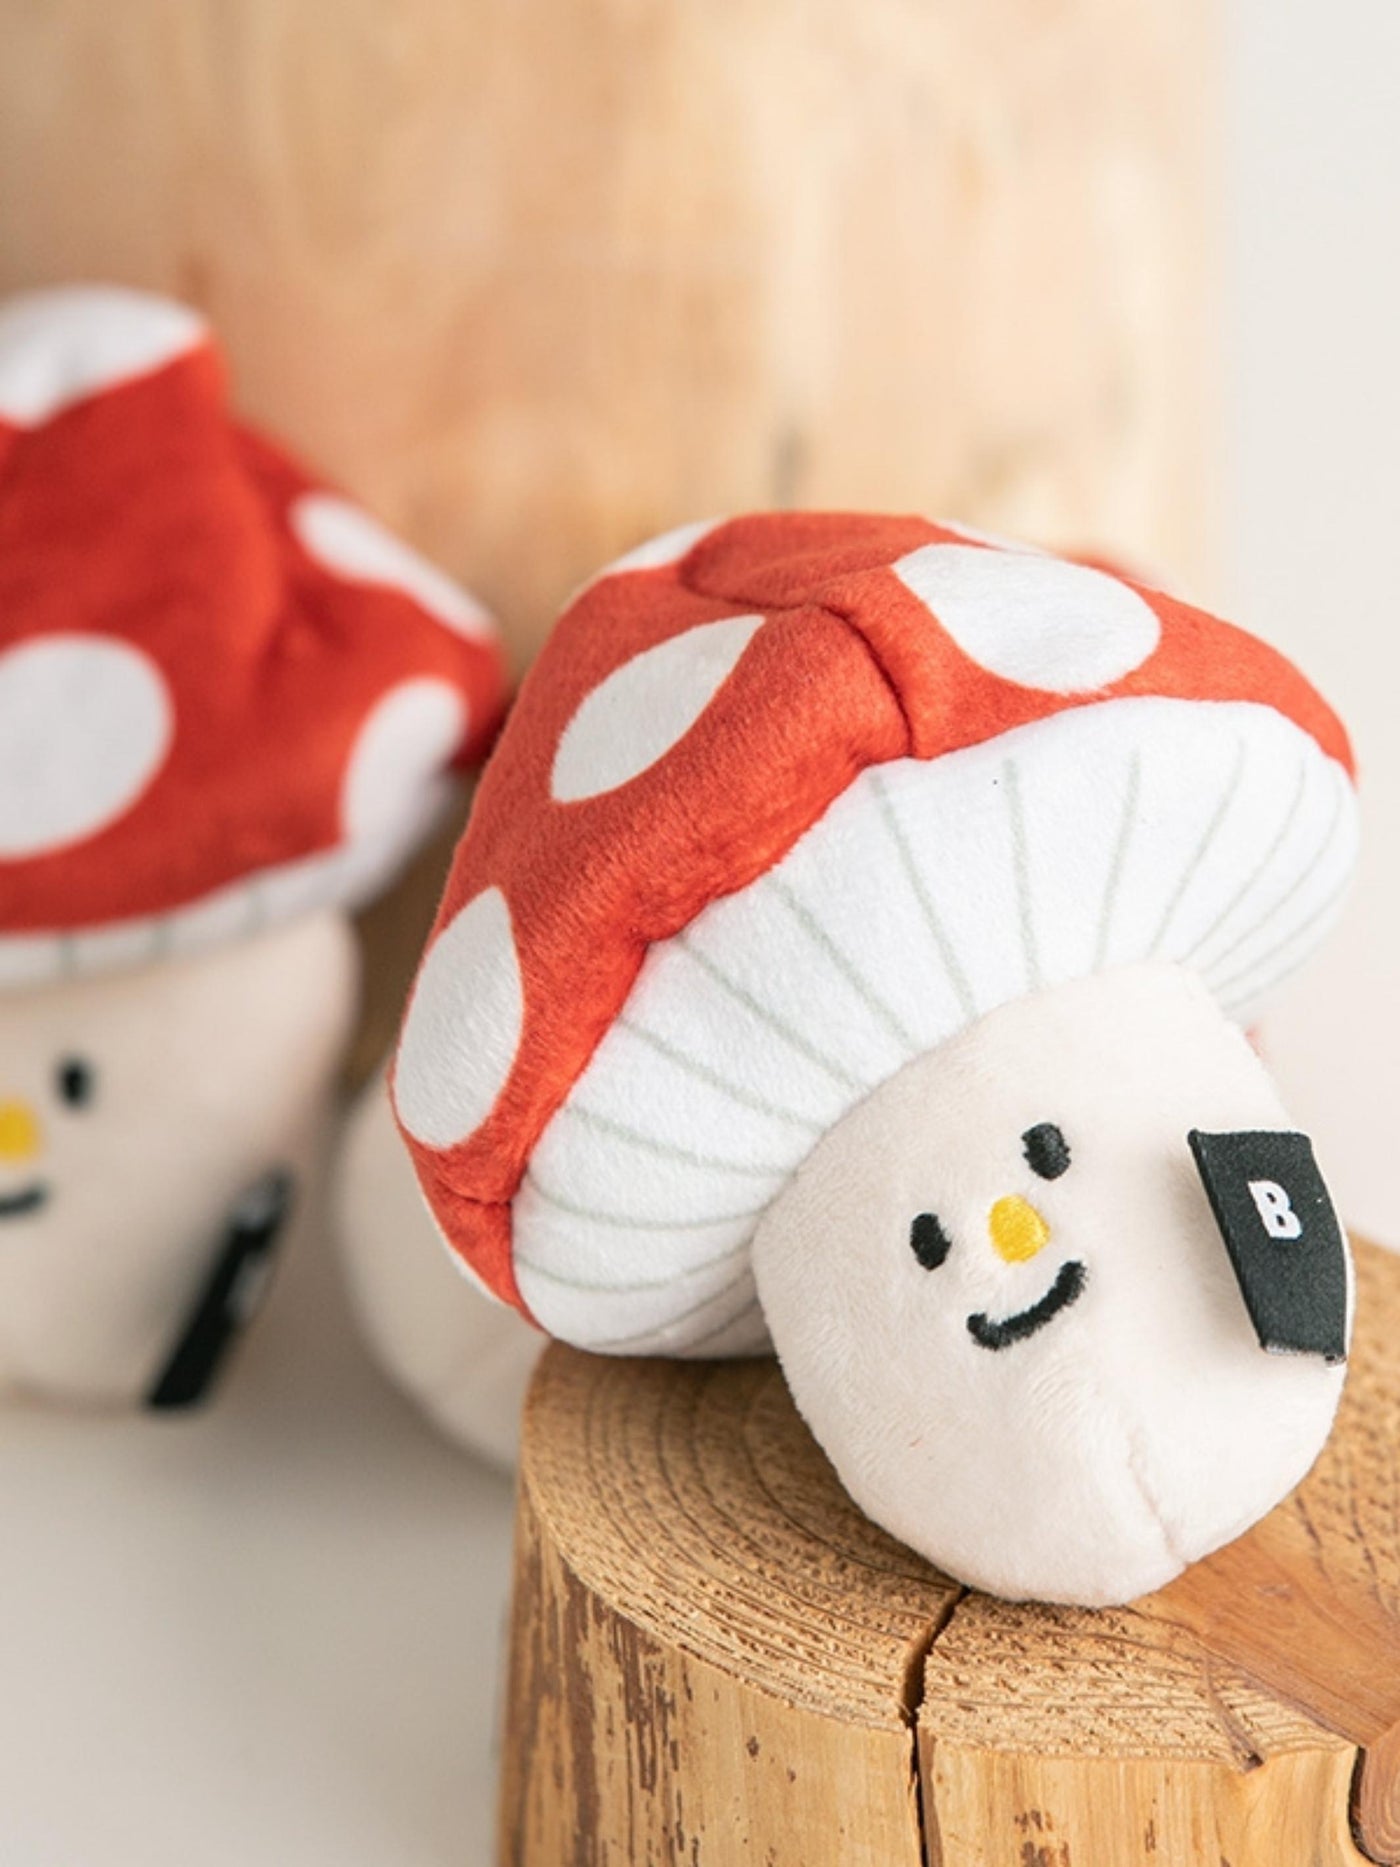 Biteme 韓國精品蘑菇造型玩具